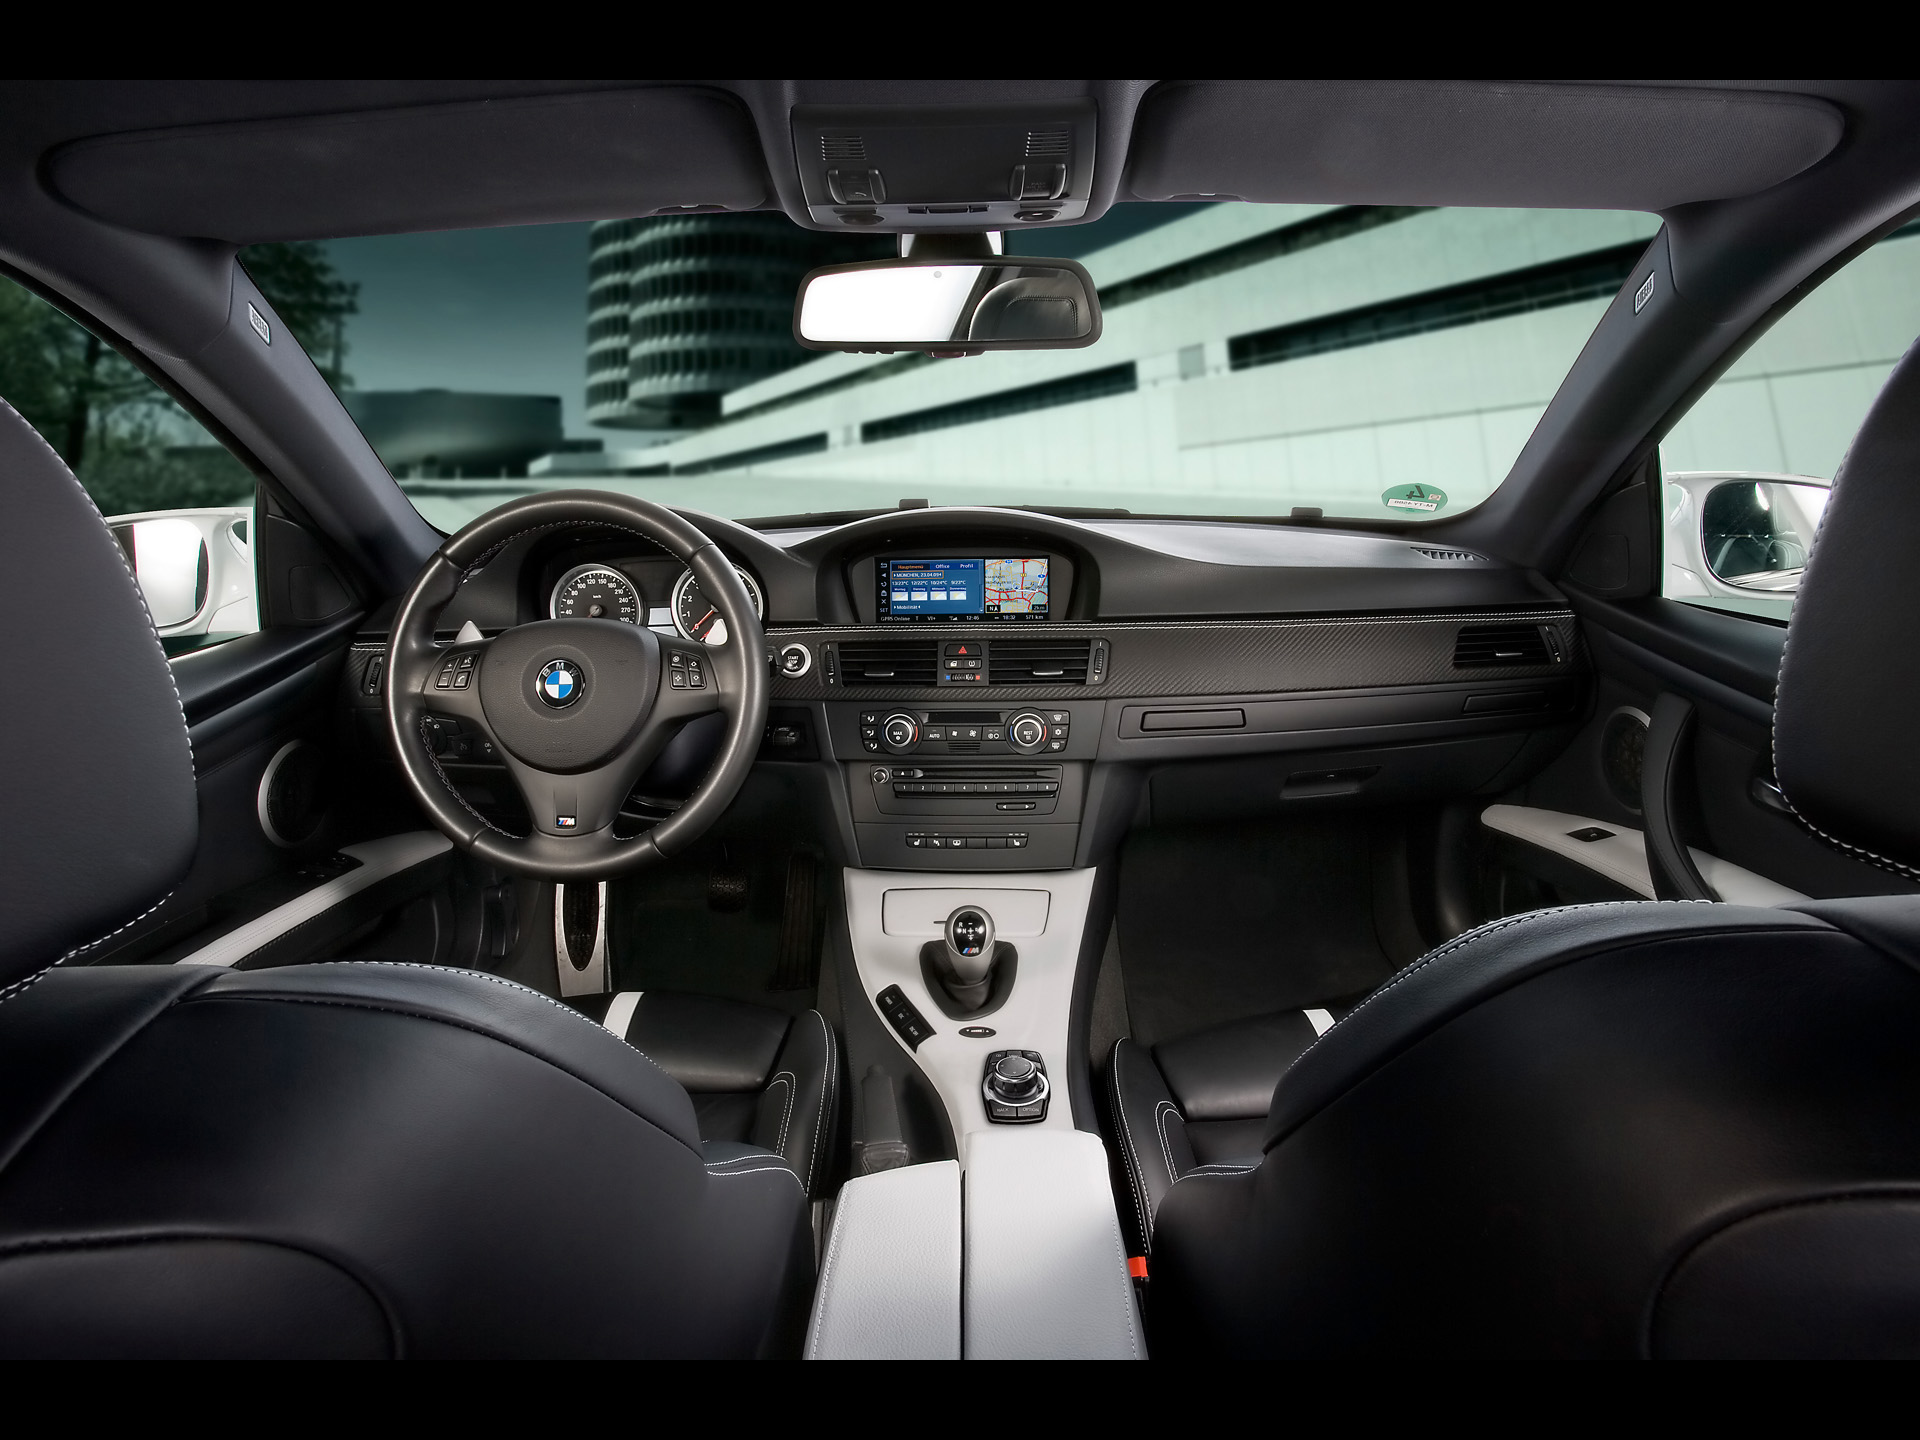 BMW Top M3 pick up desktop wallpaper | WallpaperPixel